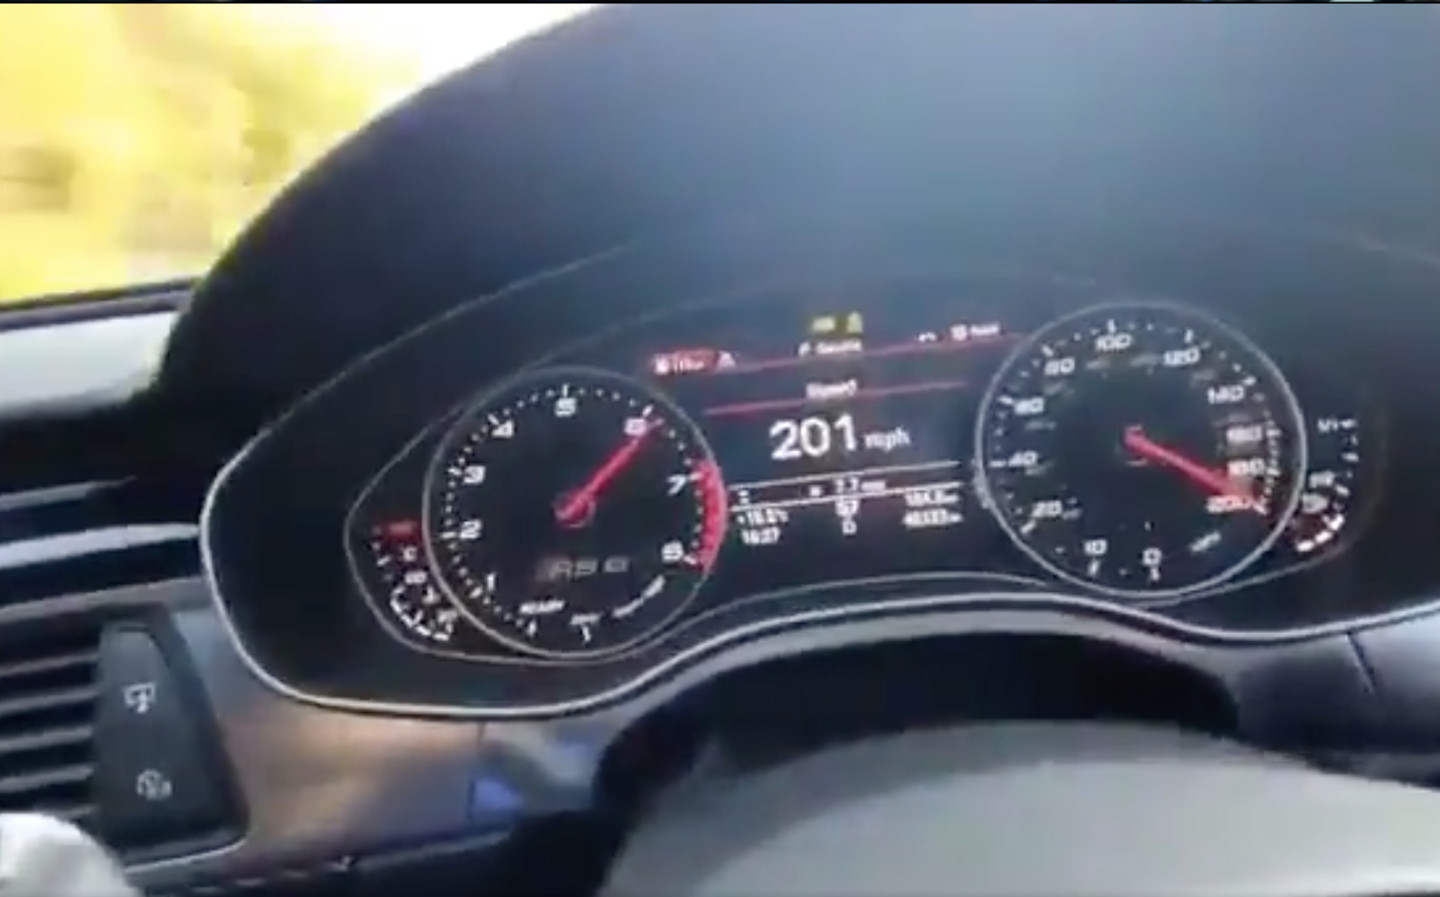 Driver films himself speeding at 201mph